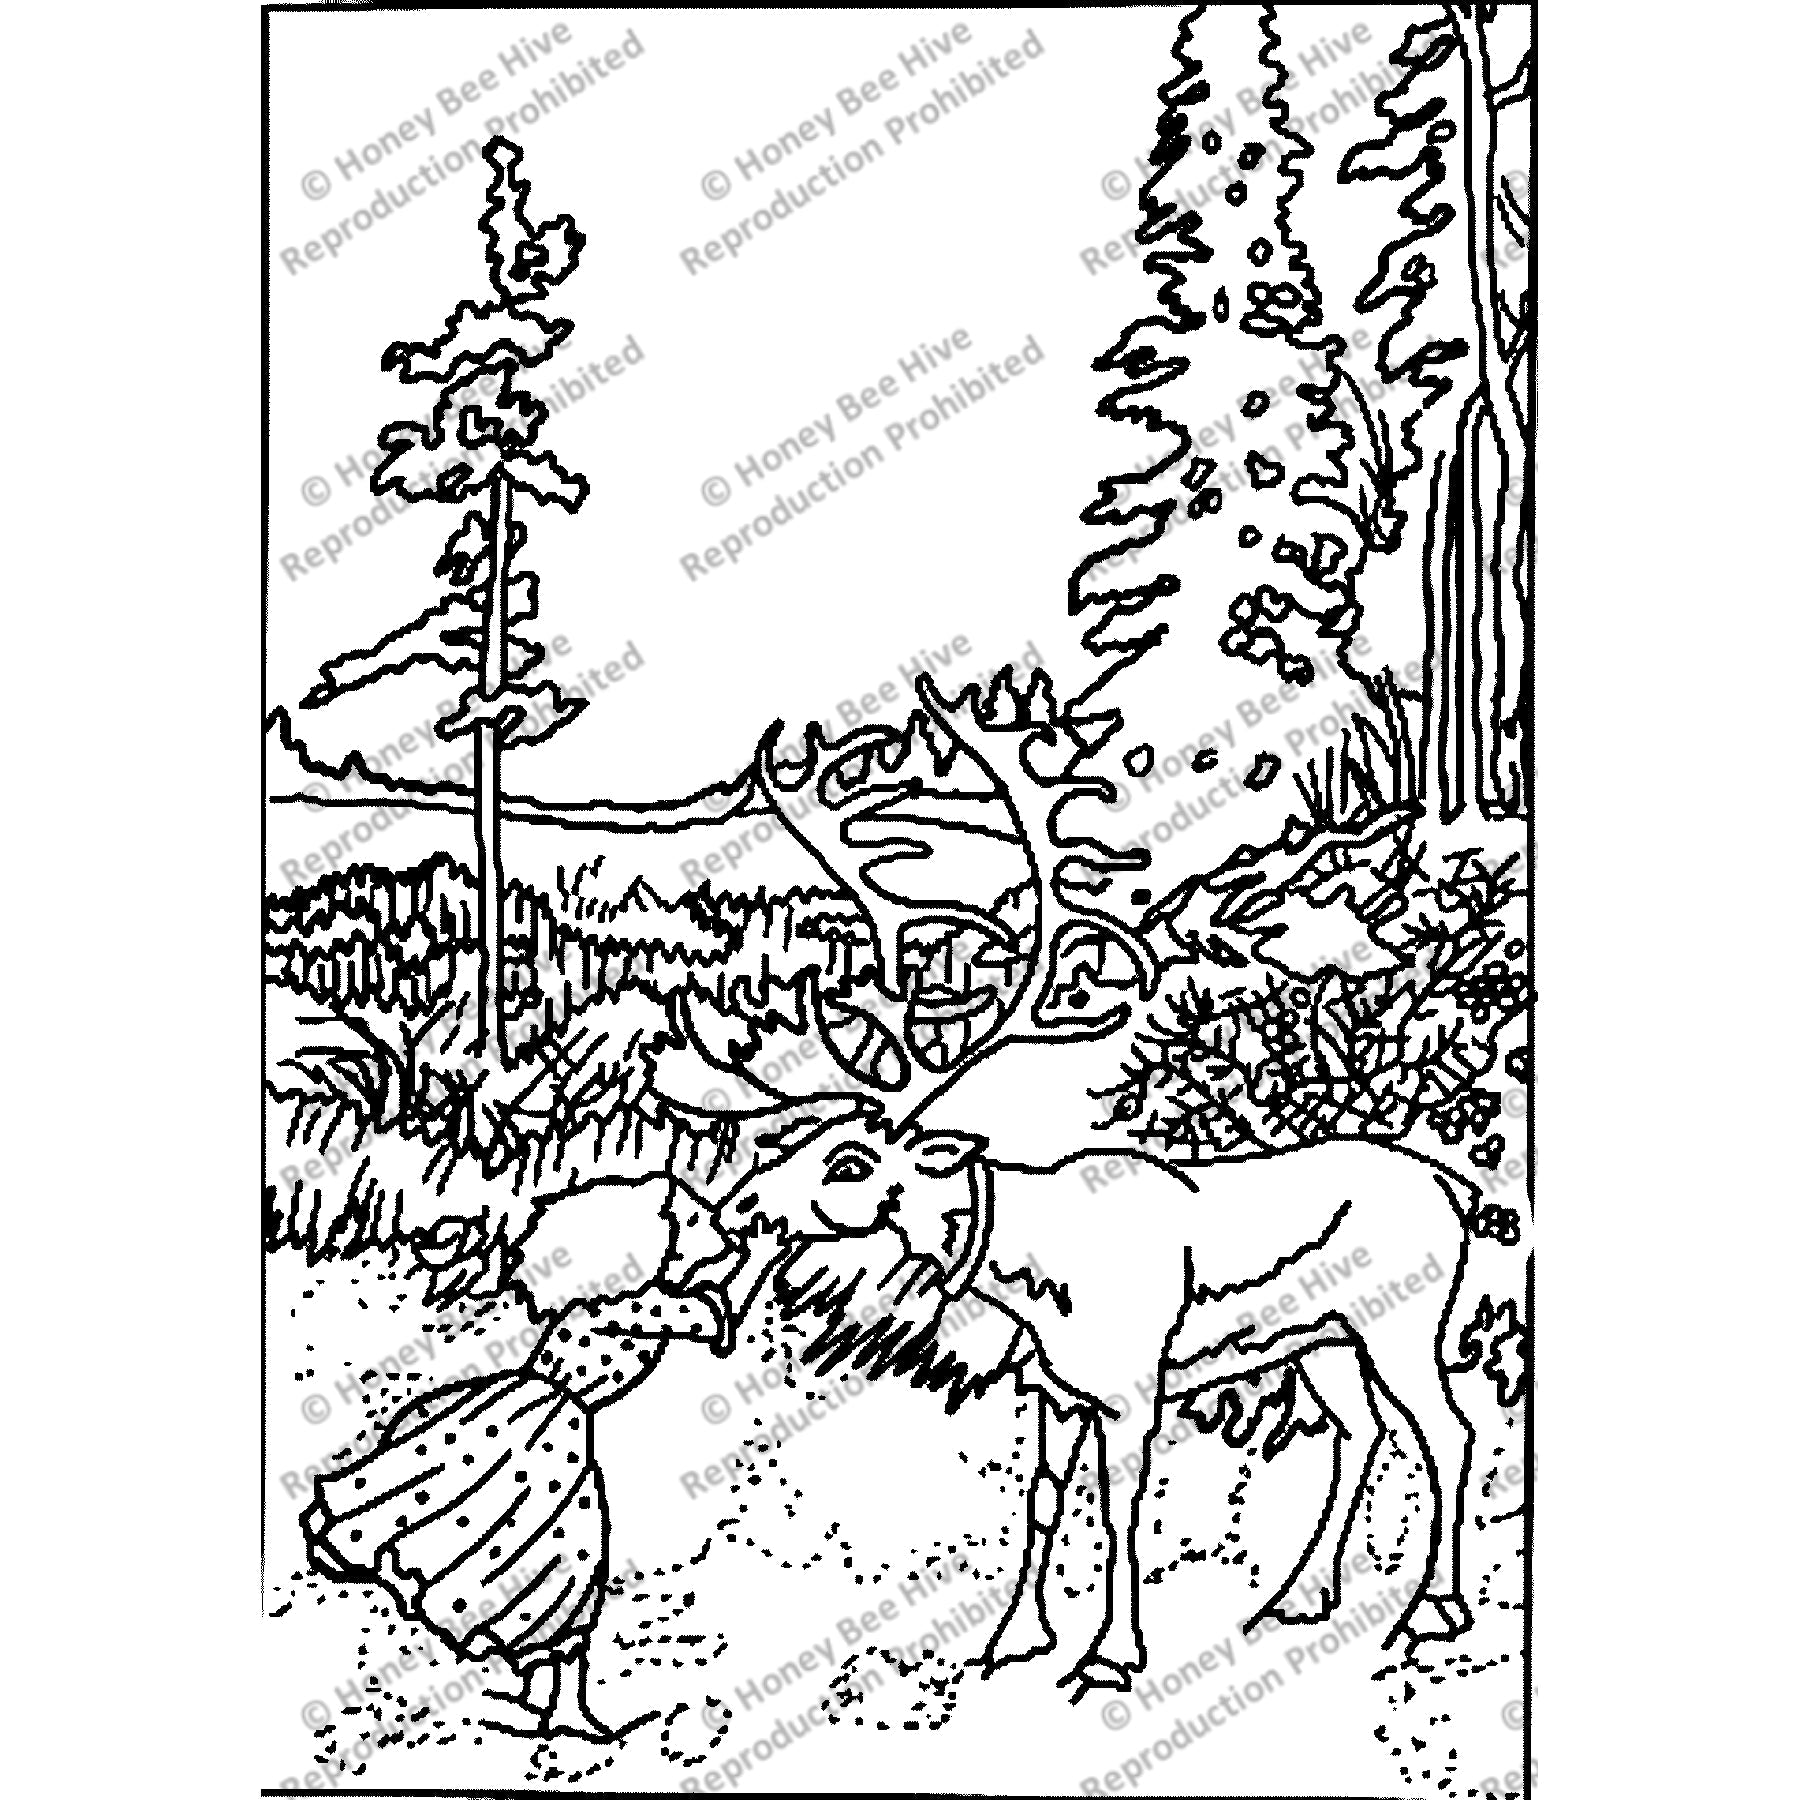 Gerda and the Reindeer, ill. Edmund Dulac, 1911, rug hooking pattern